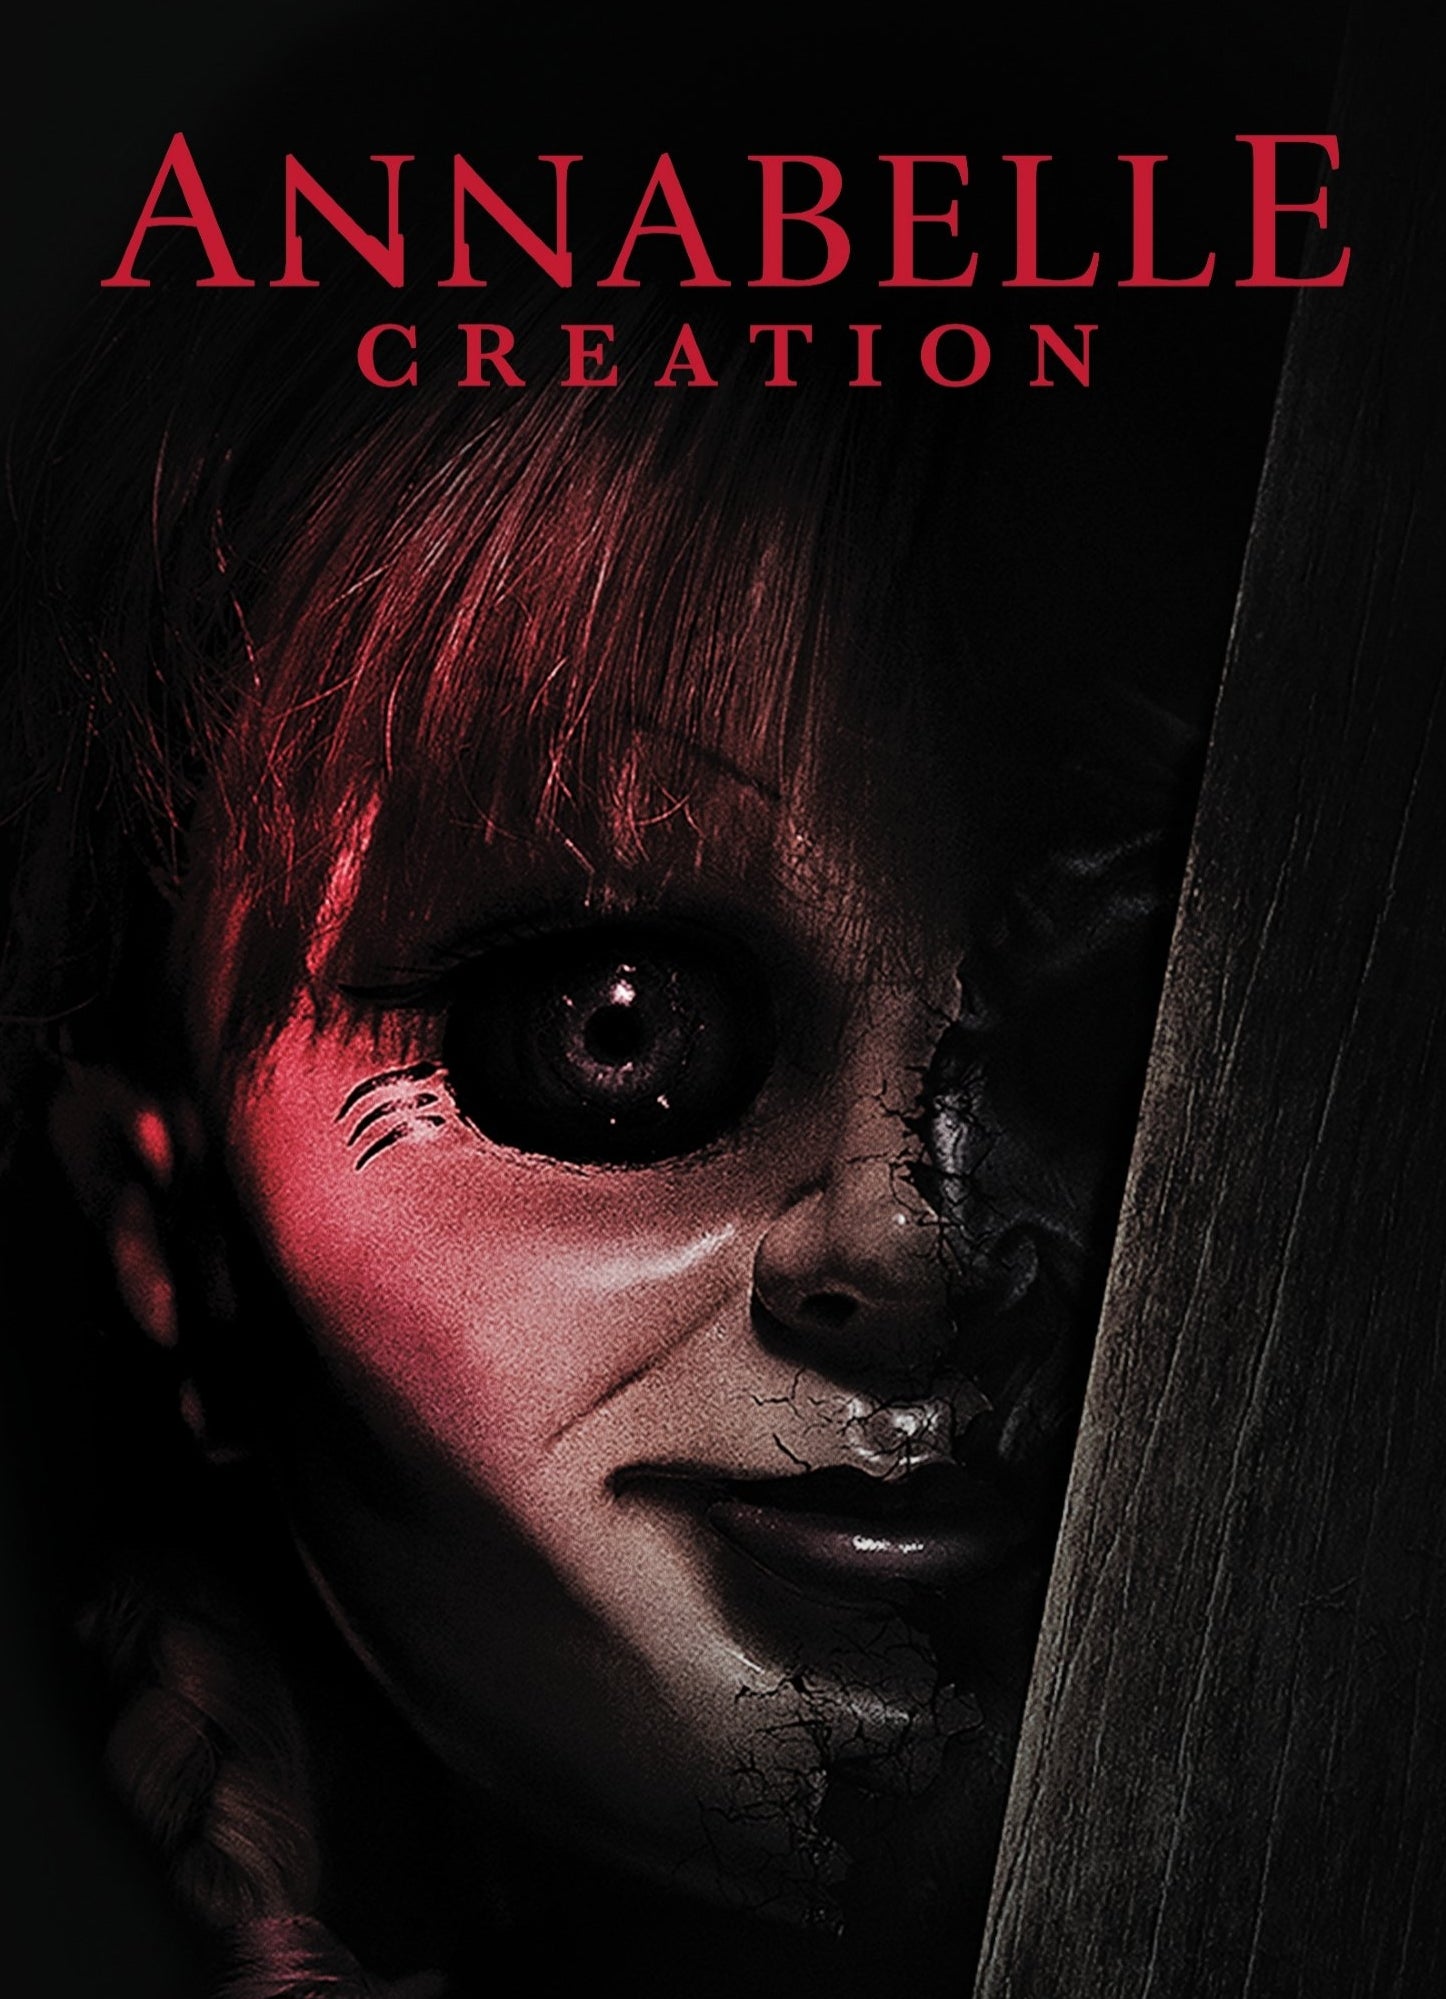 Annabelle: Creation cover art